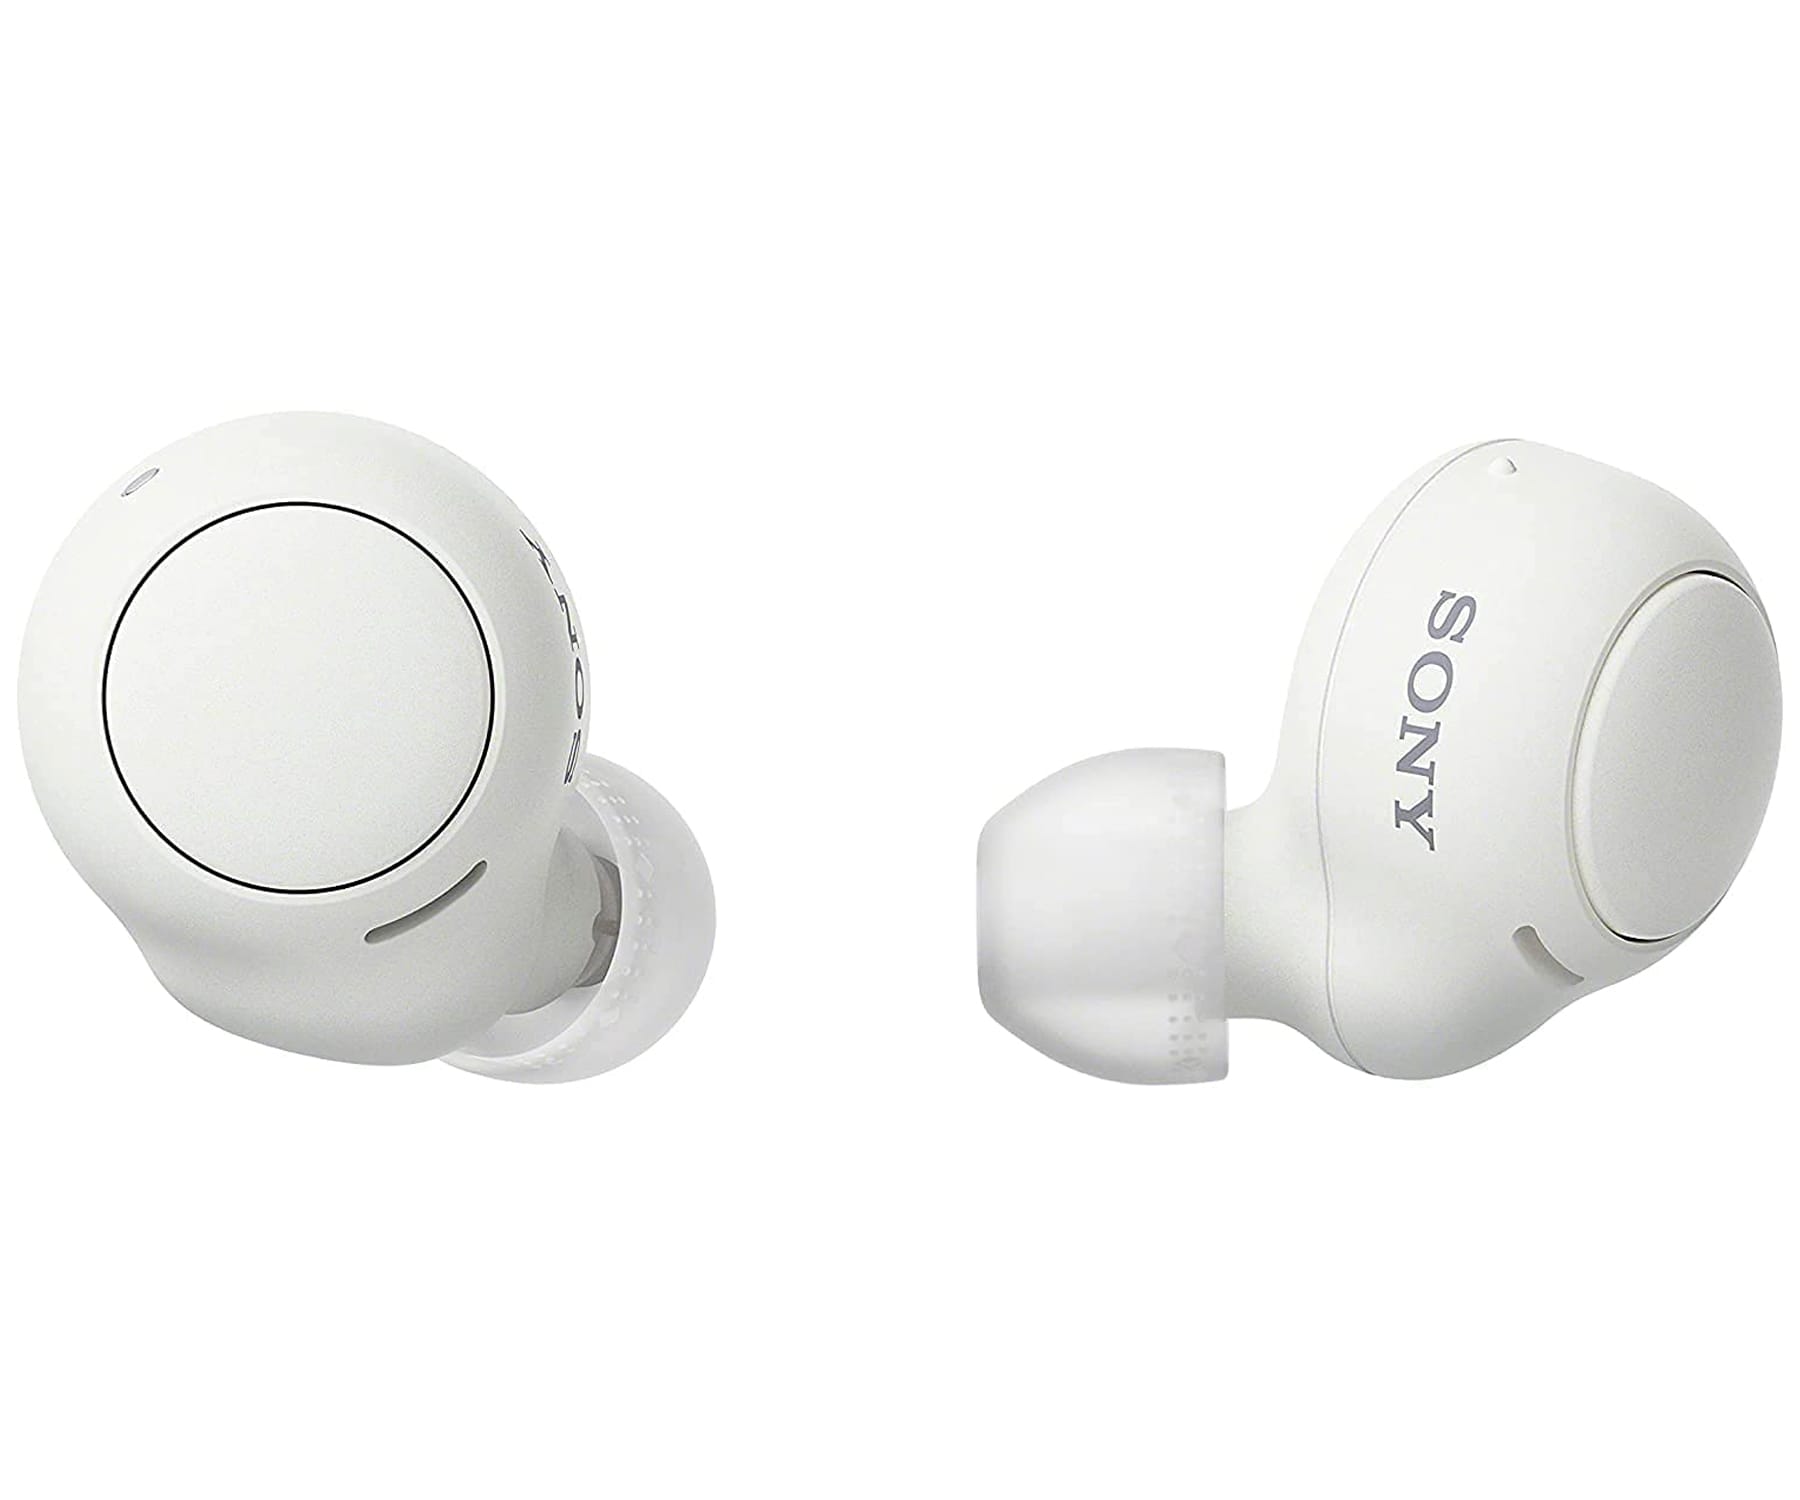 SONY WF-C500 Auriculares True Wireless Blancos